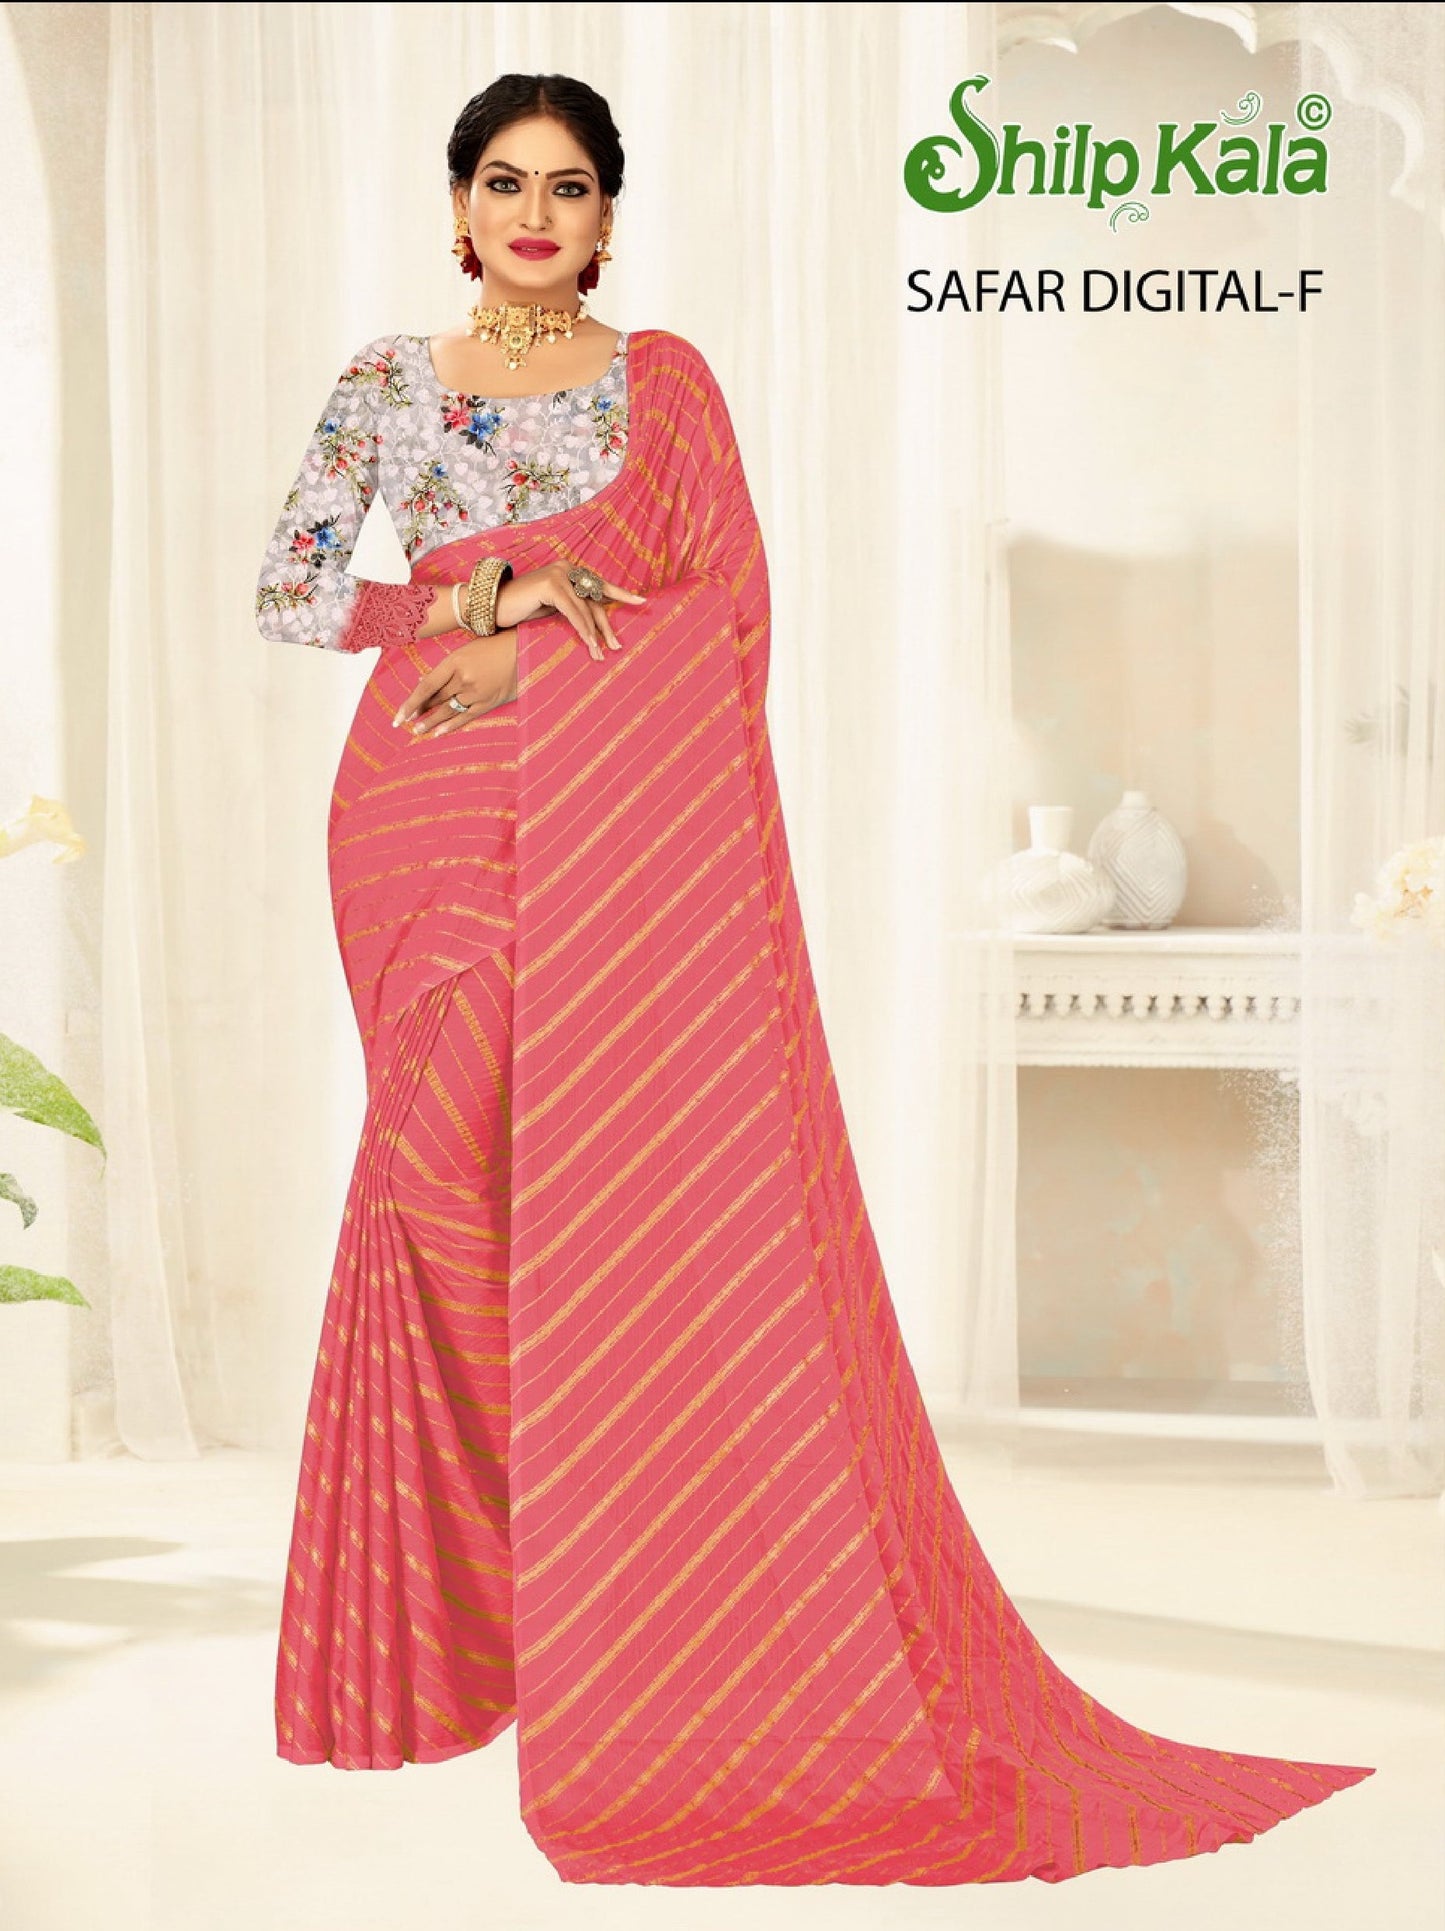 Safar Multicolor Saree with Tone to Tone Matching and Digital Printed Saree